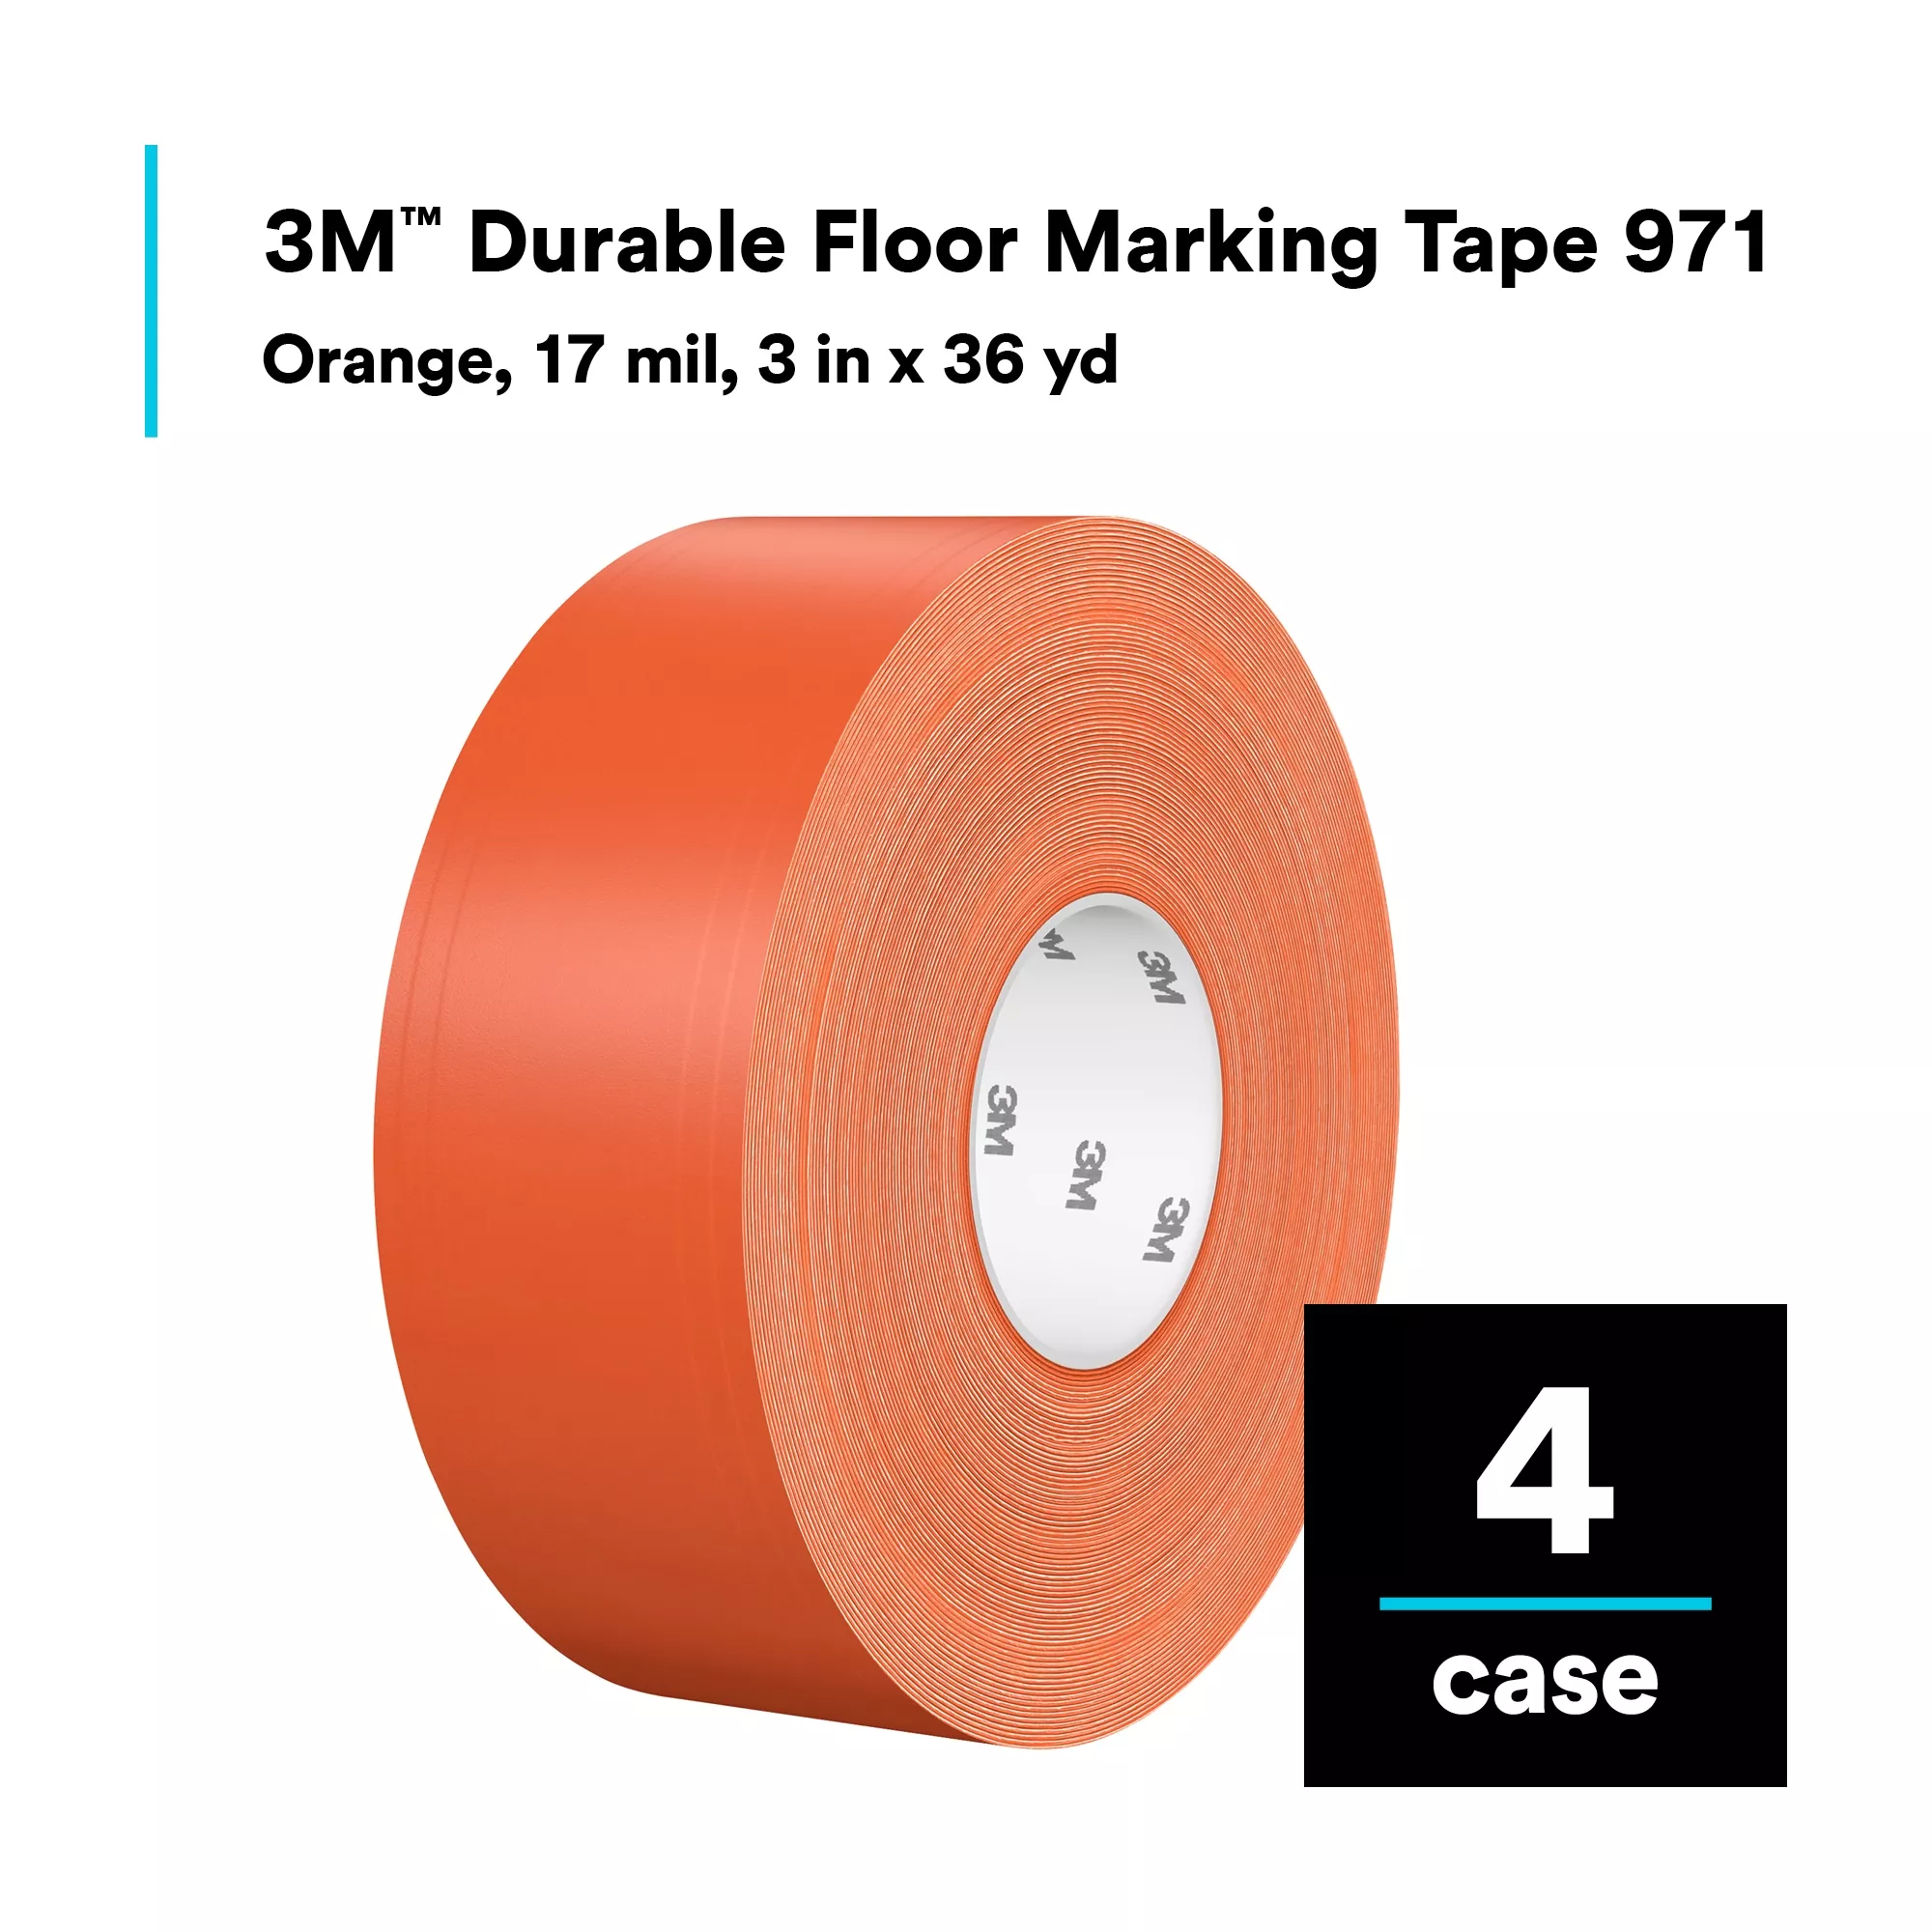 SKU 7100260043 | 3M™ Durable Floor Marking Tape 971